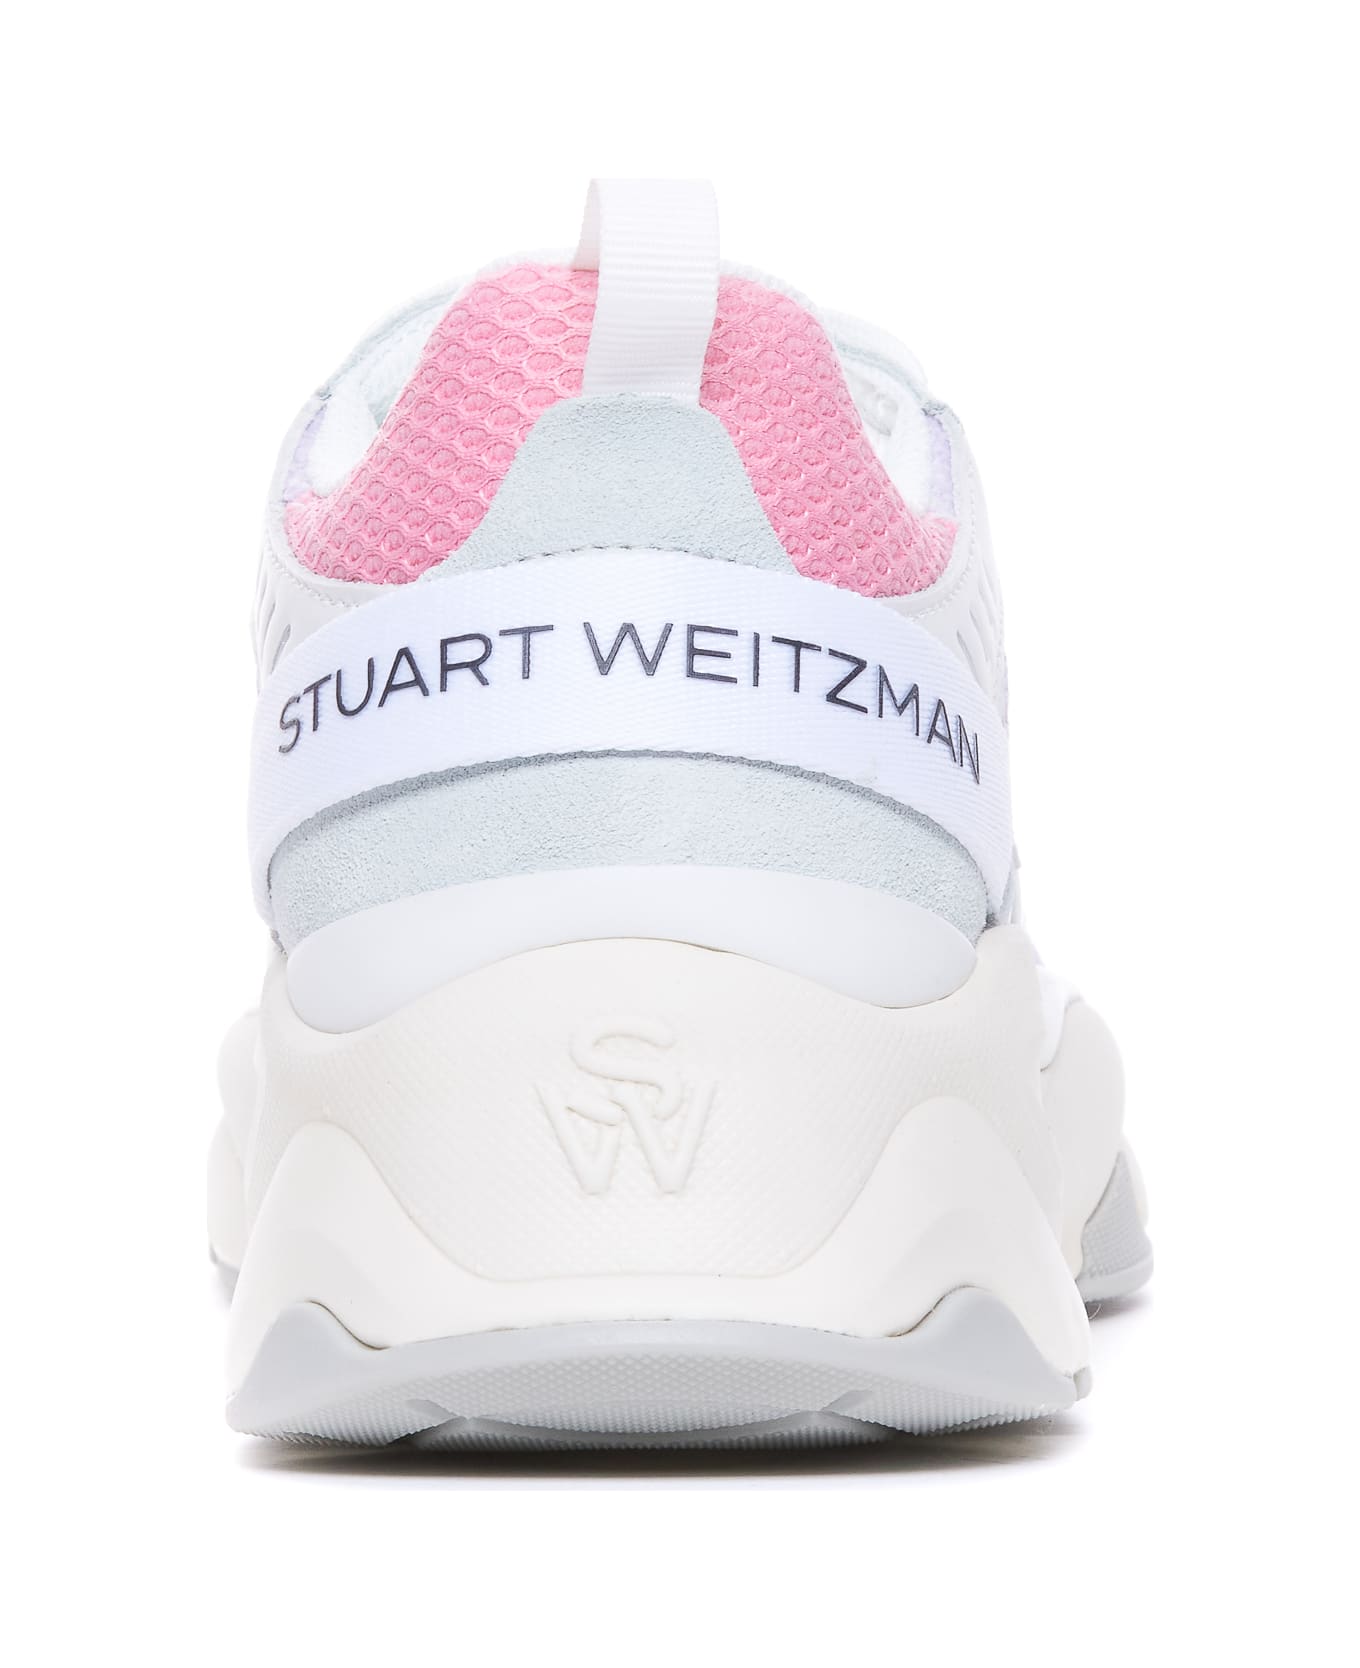 Stuart Weitzman Sw Trainer Sneakers - White